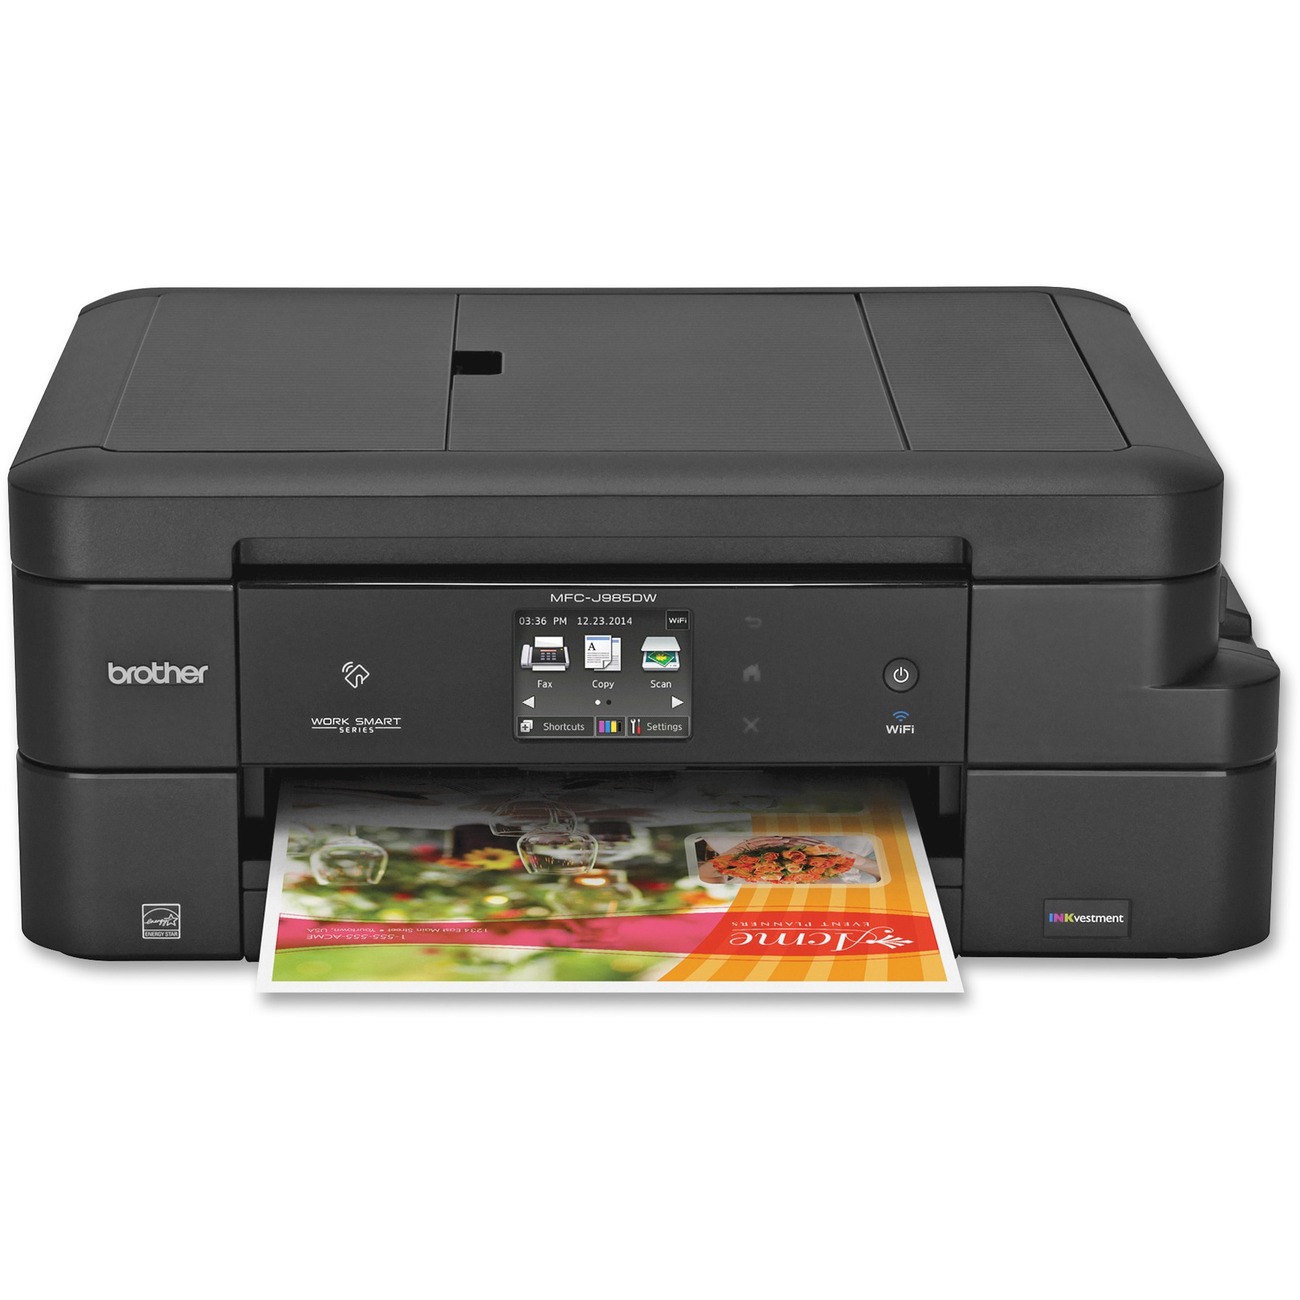 Brother MFC-J985DW Work Smart Color All-in-One Inkjet Printer INKvestment Cartridges Printers - Newegg.com